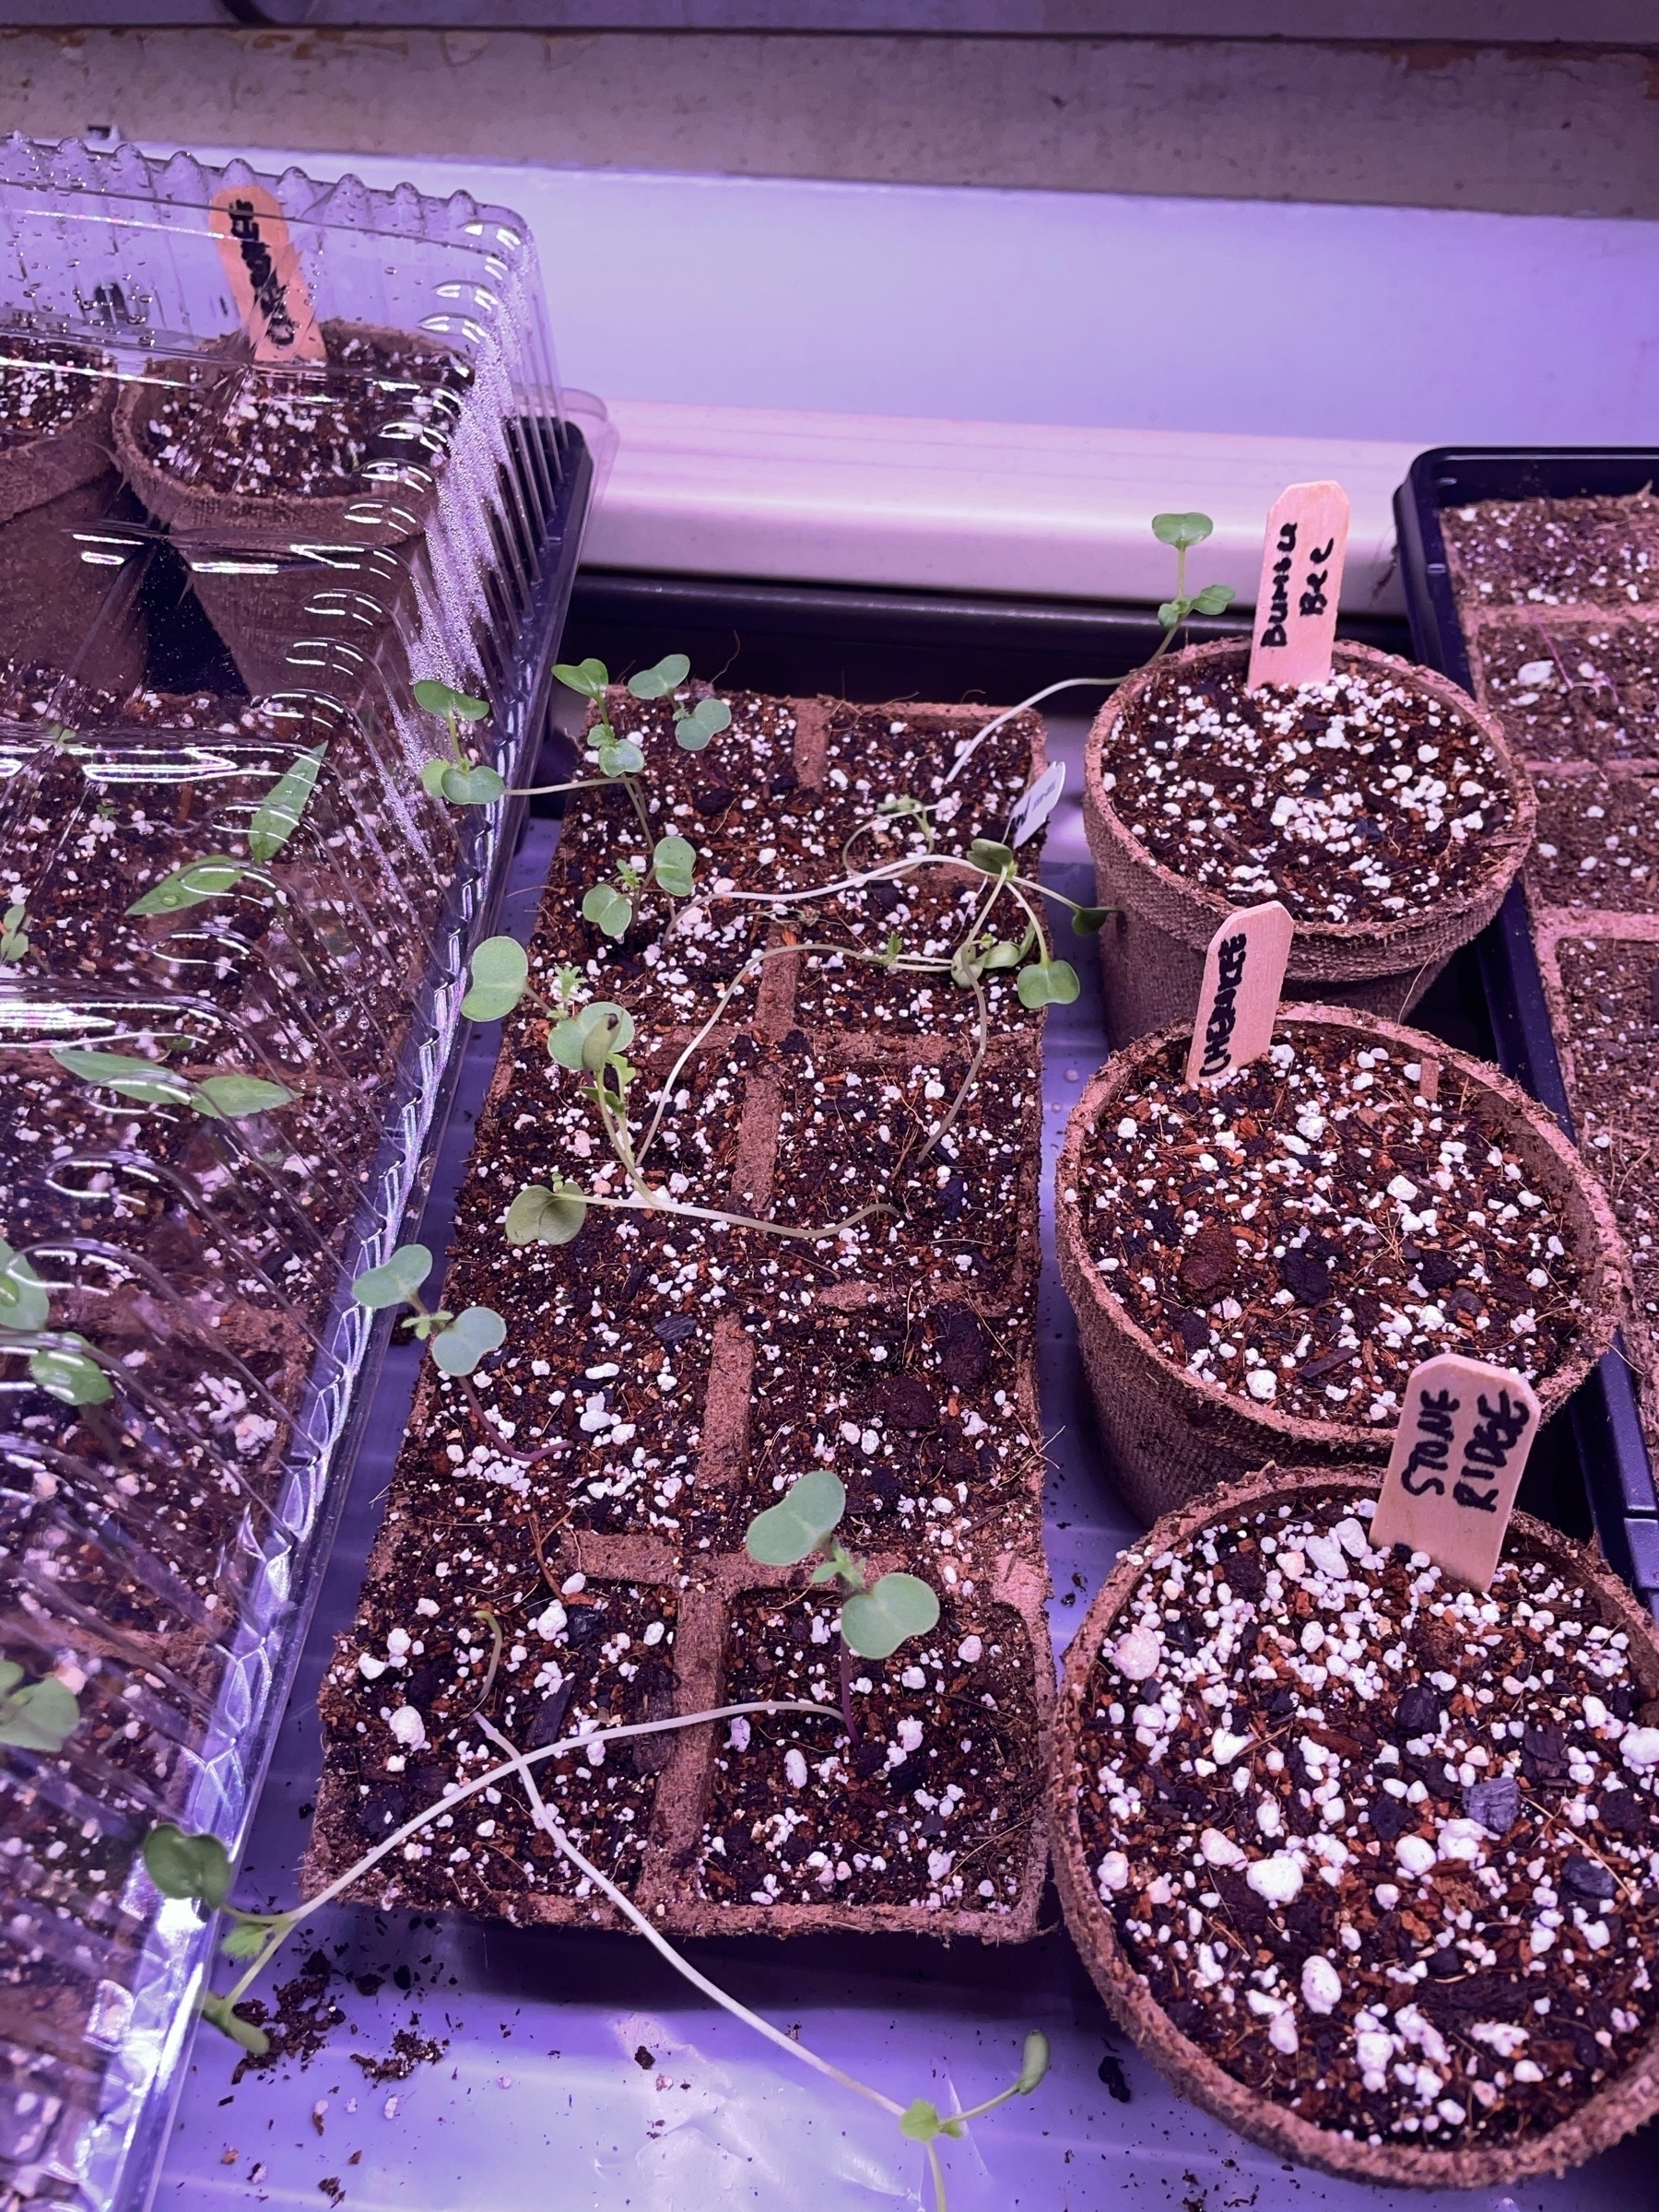 kale seedlings looking a little stringy under a grow light